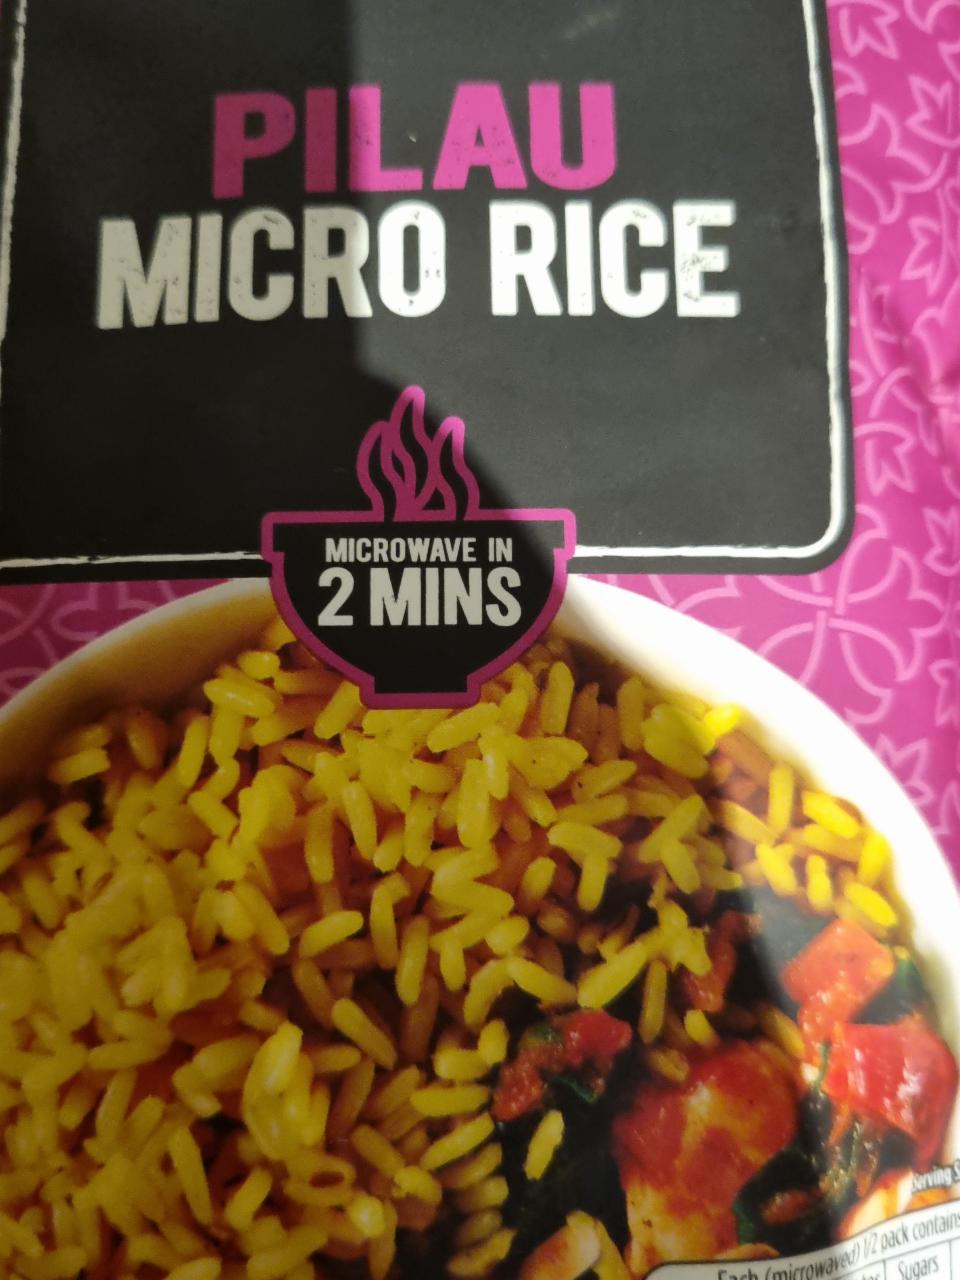 Fotografie - pilau micro rice asda